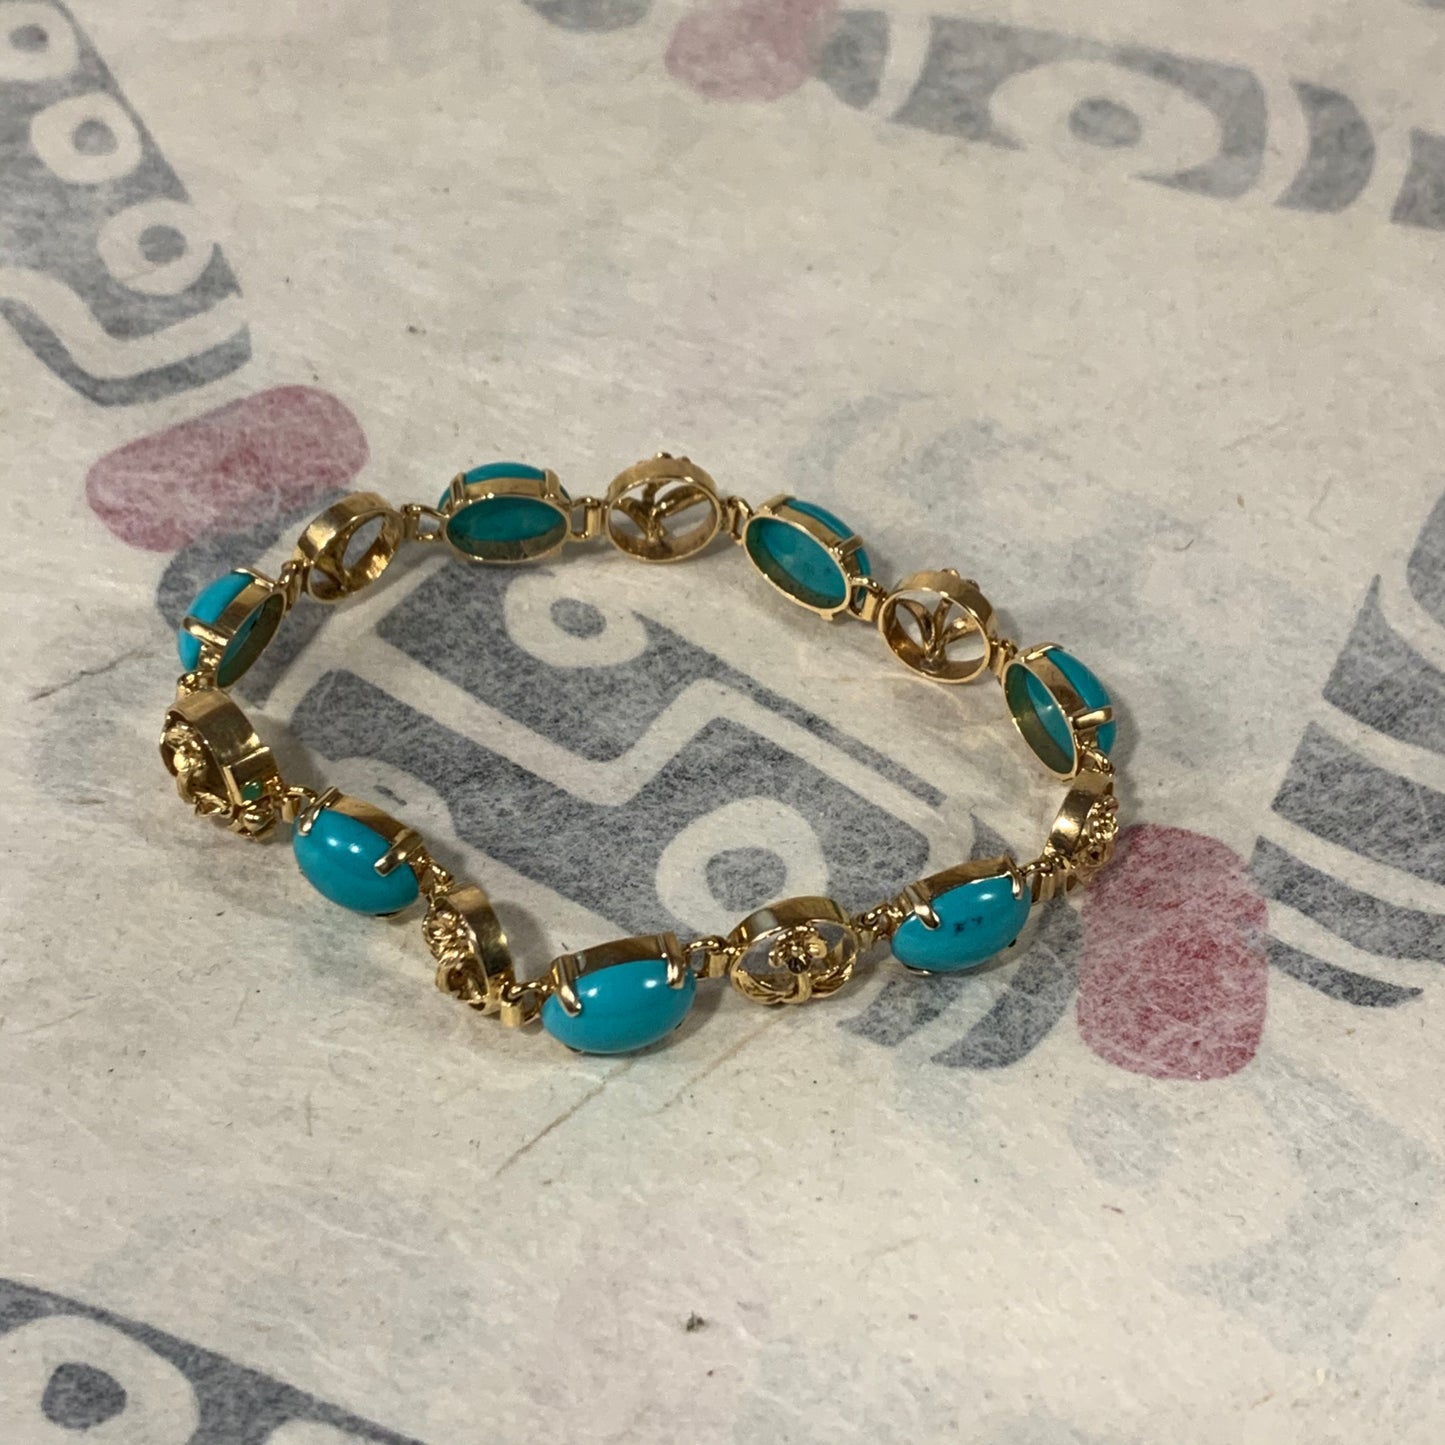 Turquoise bracelet in 14kt gold